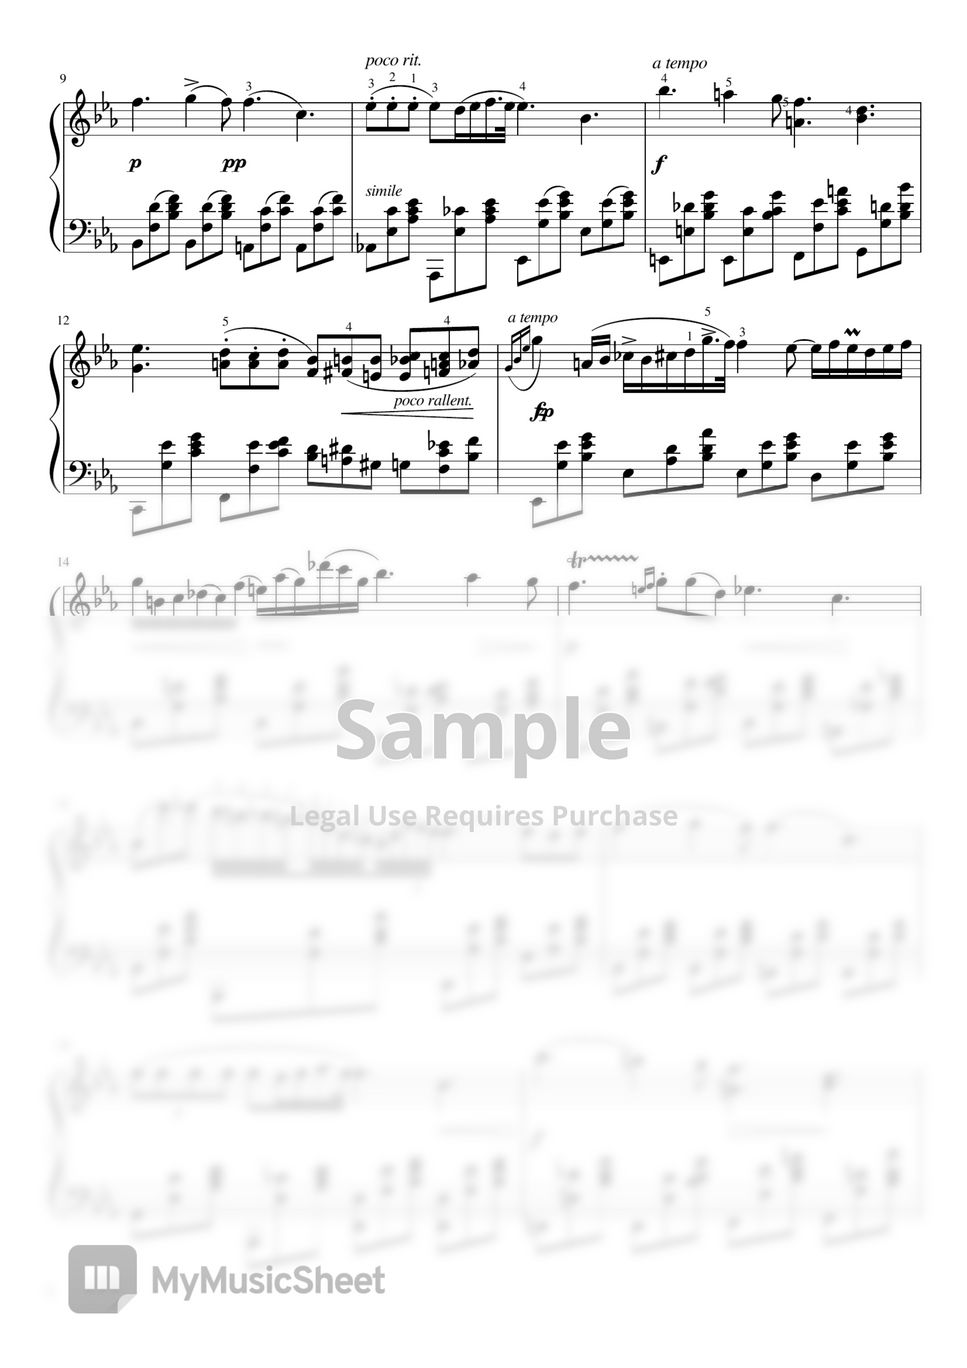 Frédéric Chopin - Chopin - Nocturne Op 9 No 2 (E Flat Major) by Frédéric Chopin